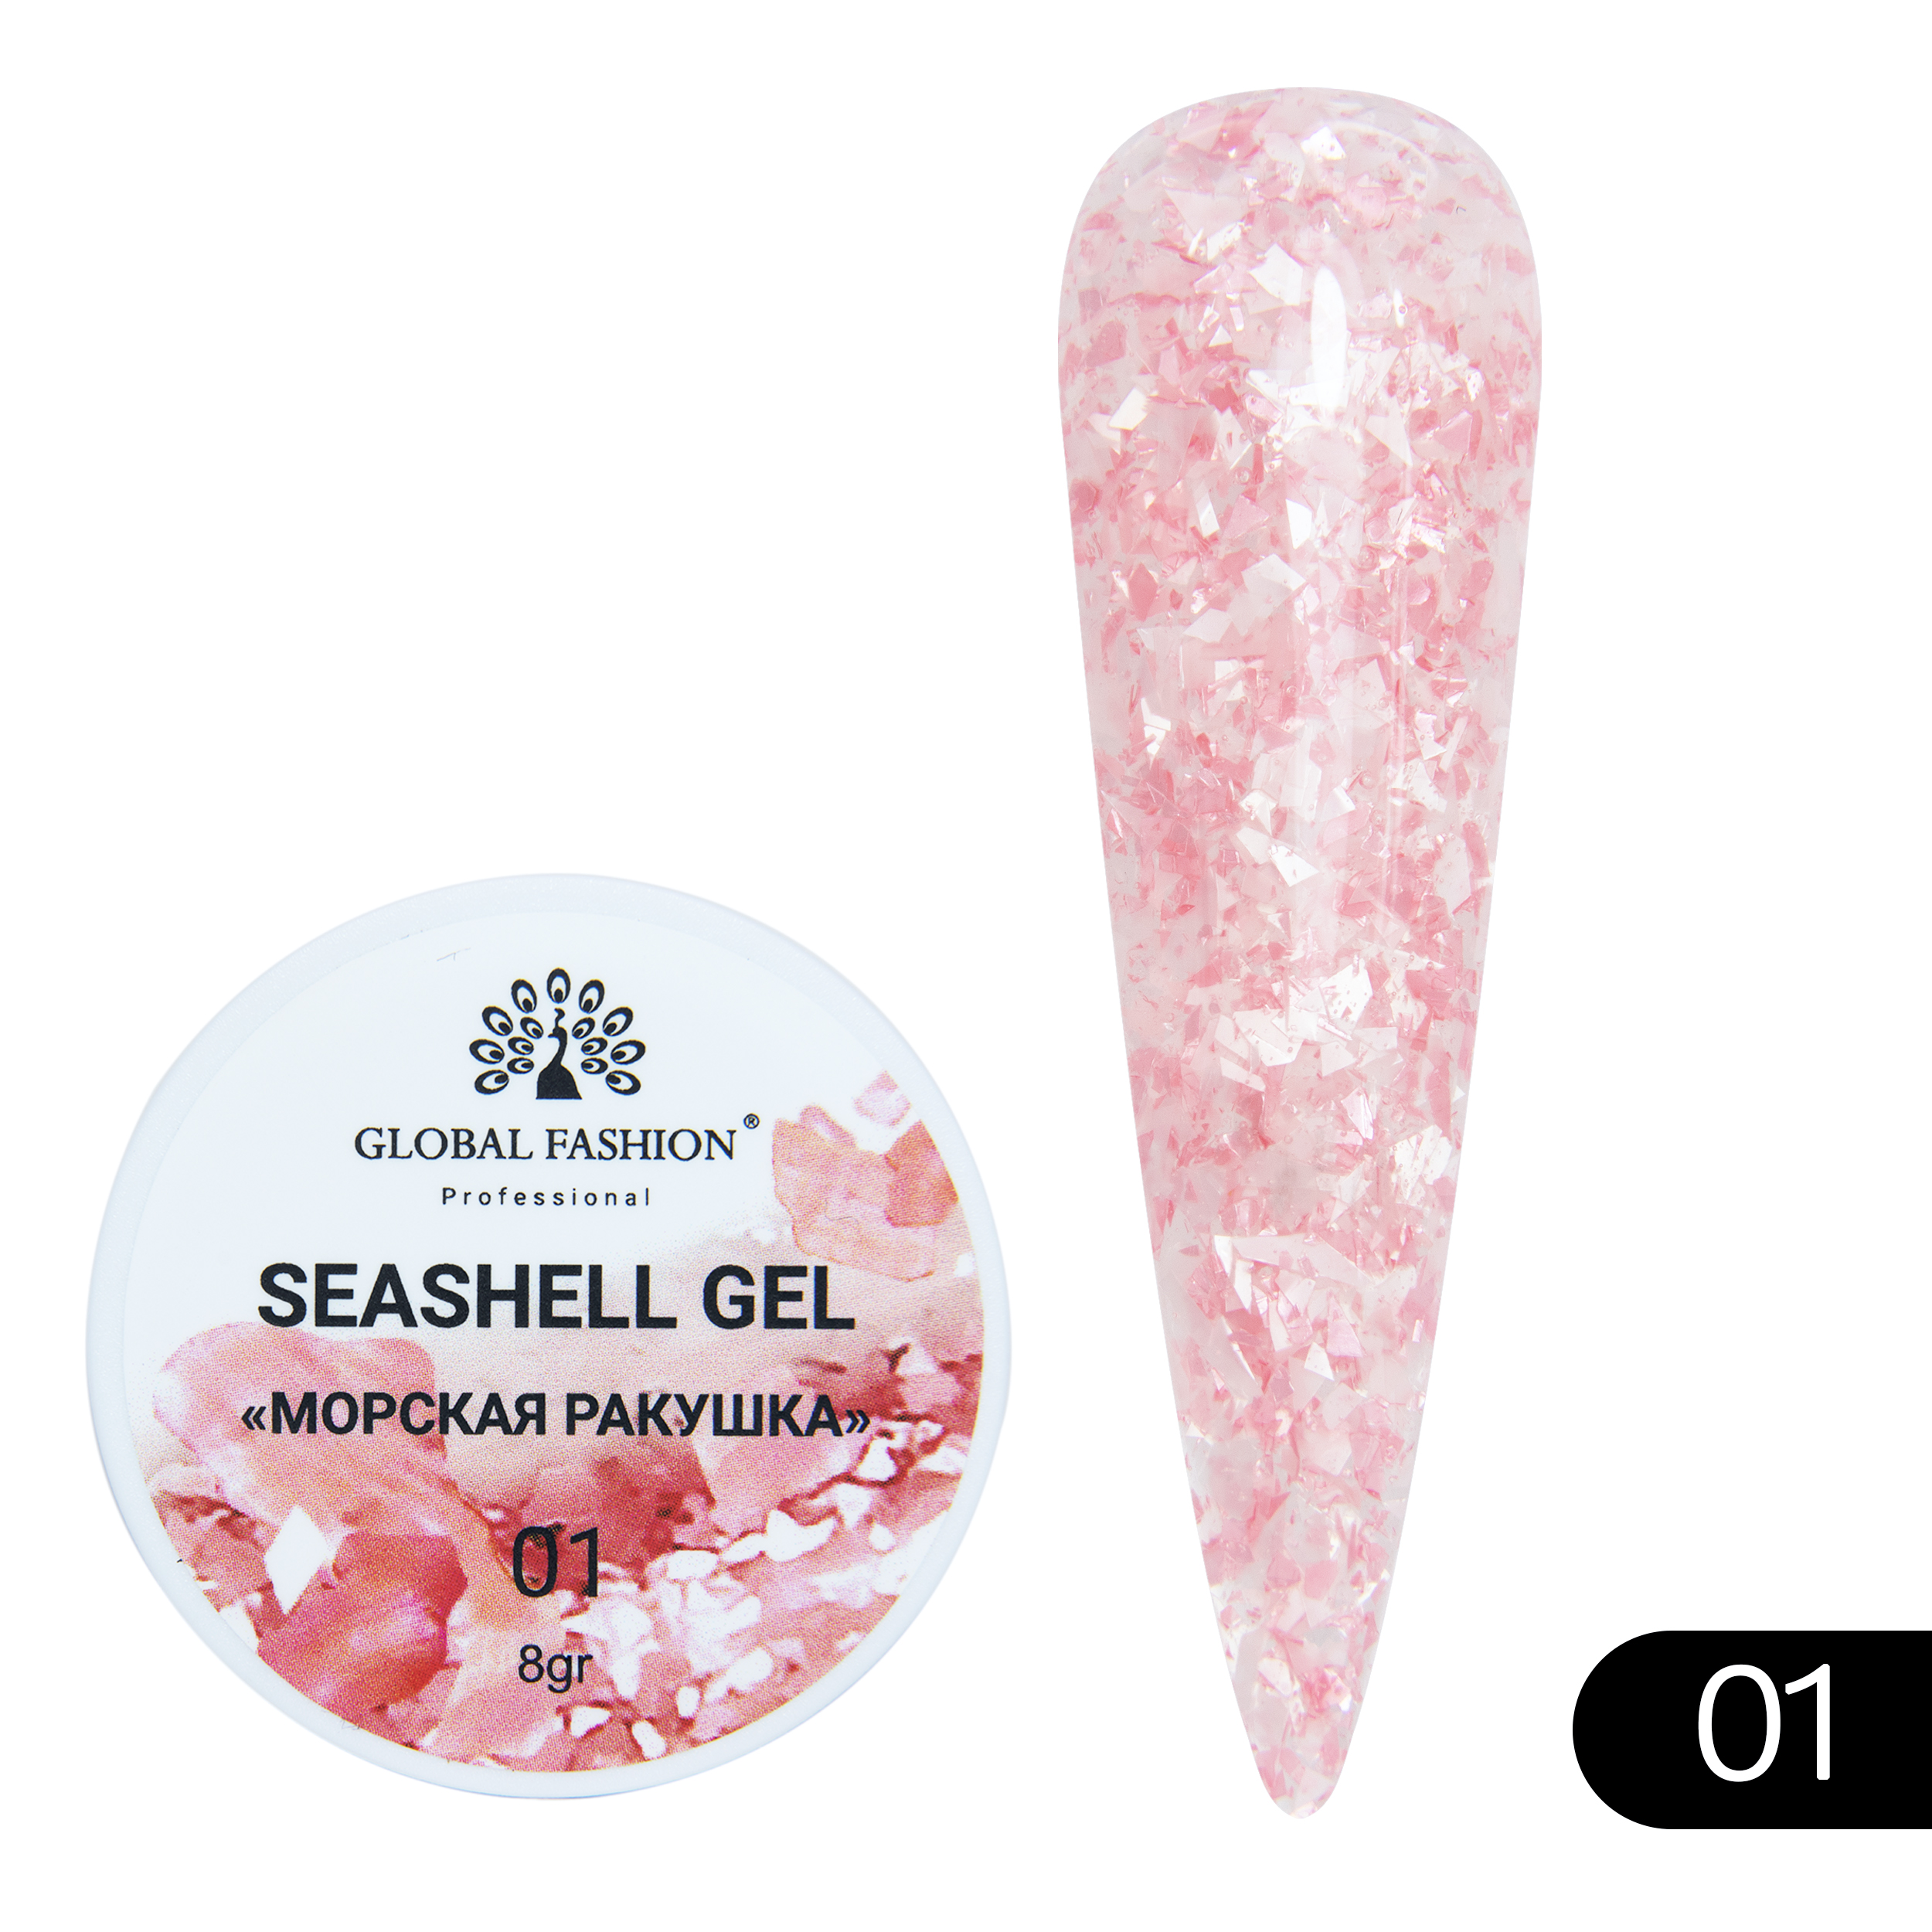 Гель-краска для ногтей Global Fashion Seashell Gel с мраморным эффектом ракушки №01 5 г сачок для аквариумных рыб ferplast 50